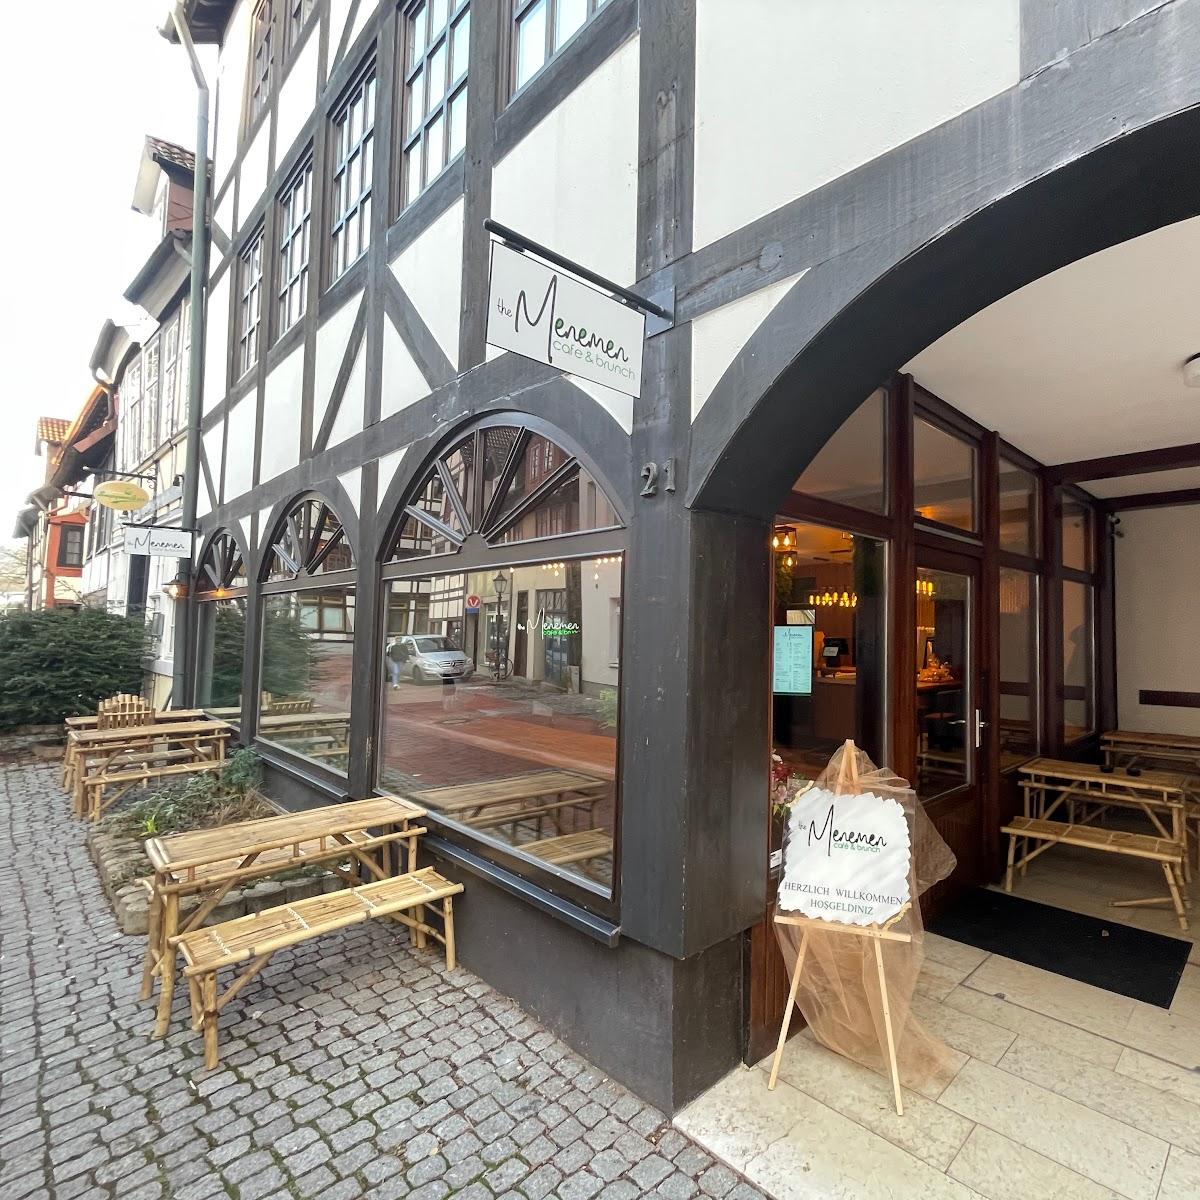 Restaurant "The Menemen - cafe & brunch" in Hameln